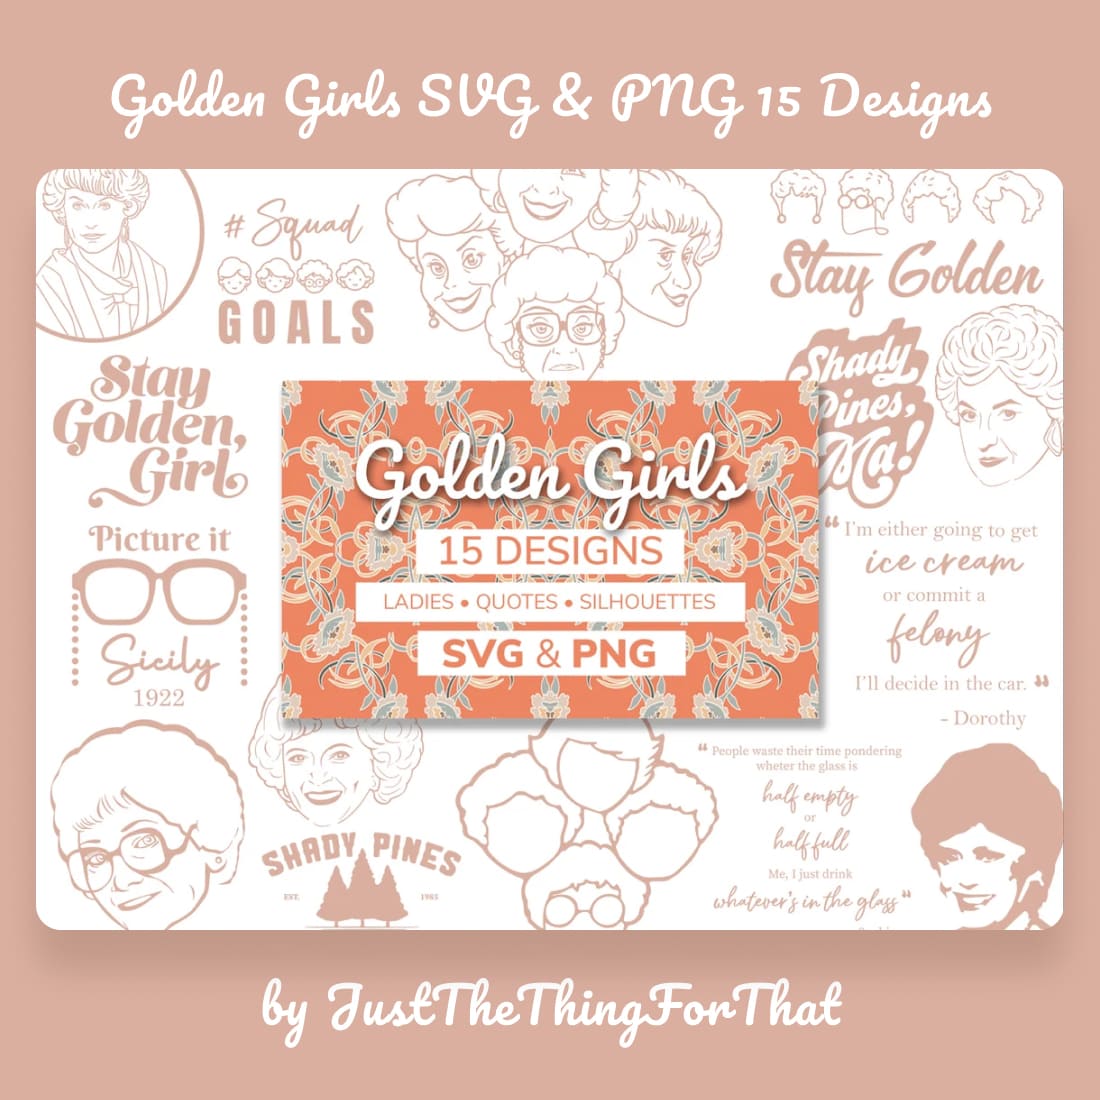 Golden girls svg png 15 designs main cover.